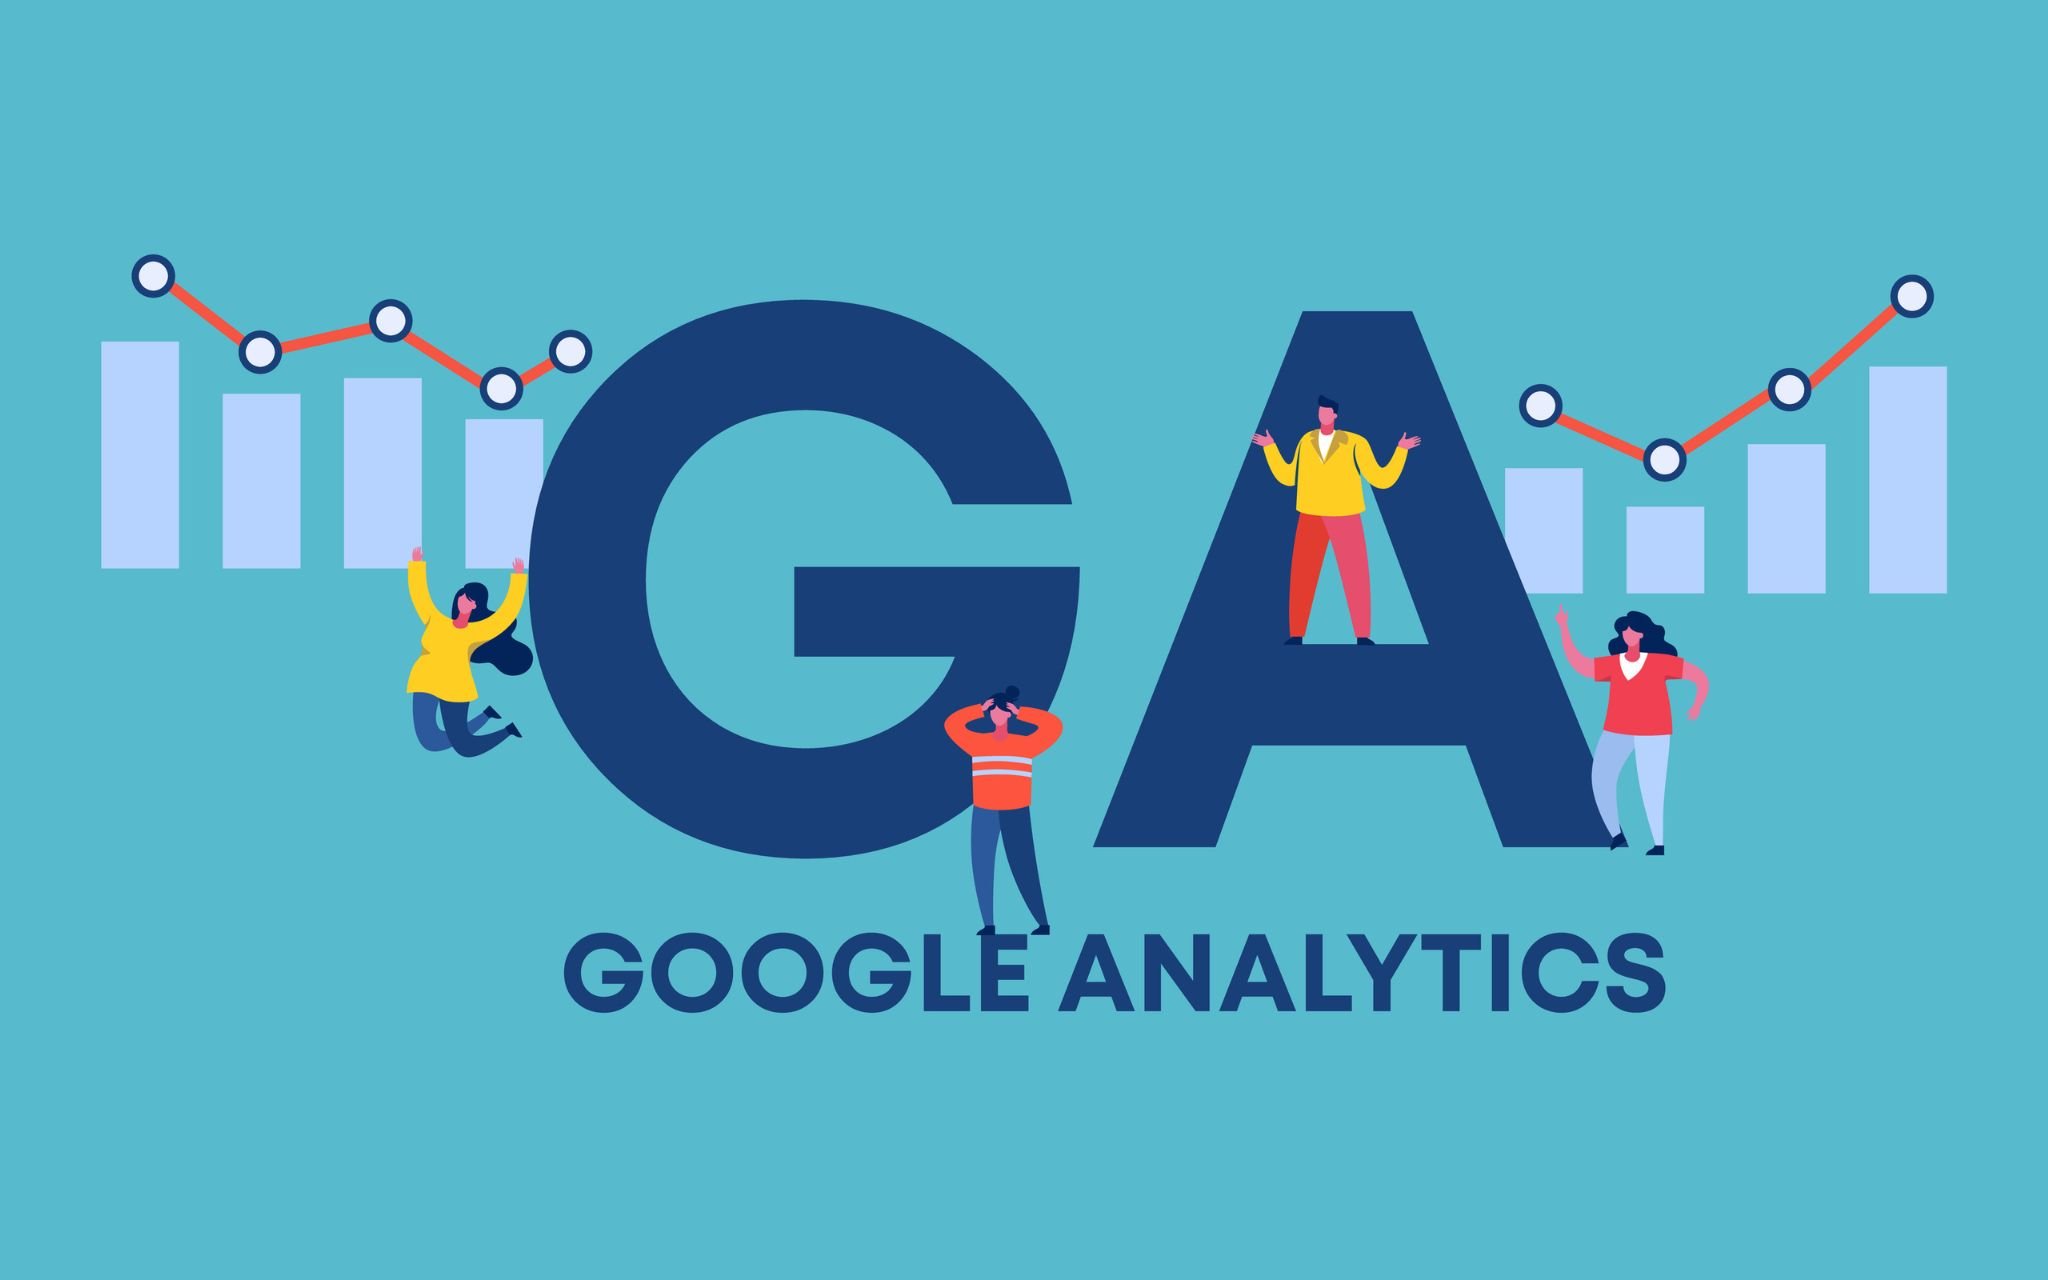 The GA Google Analytics logo